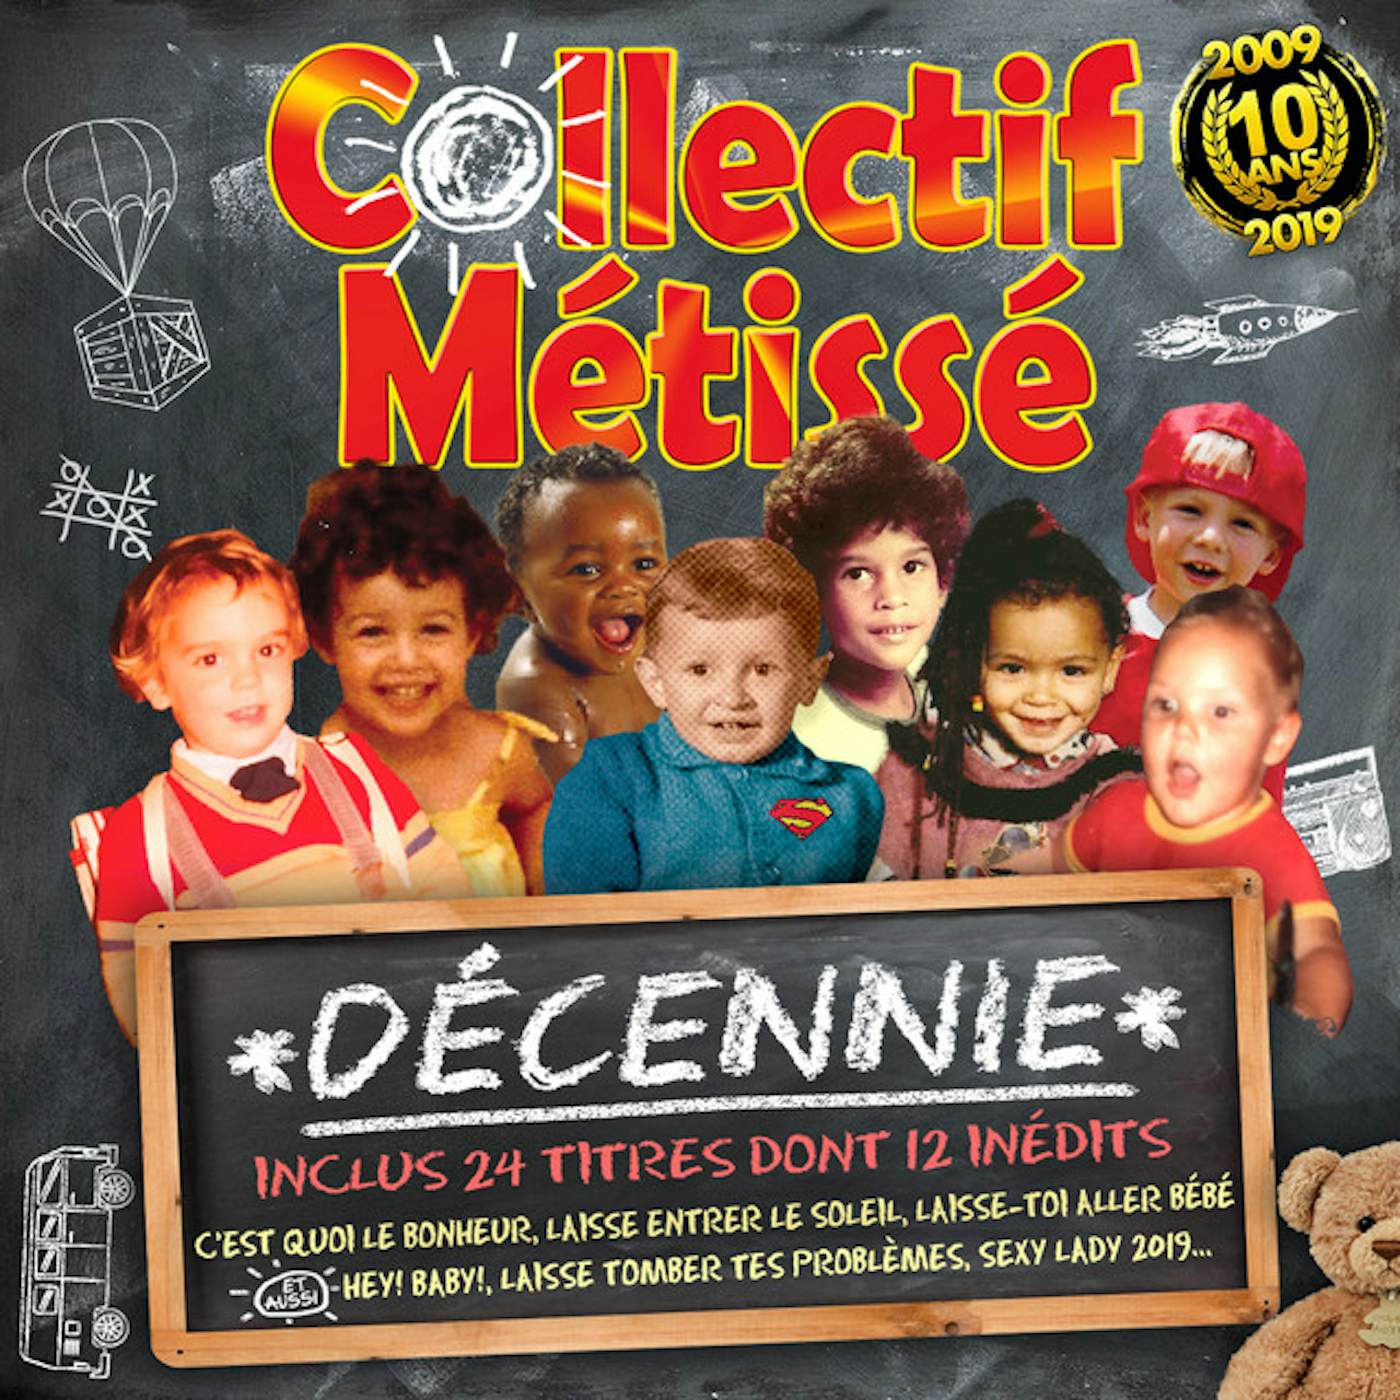 Collectif Métissé DECENNIE CD